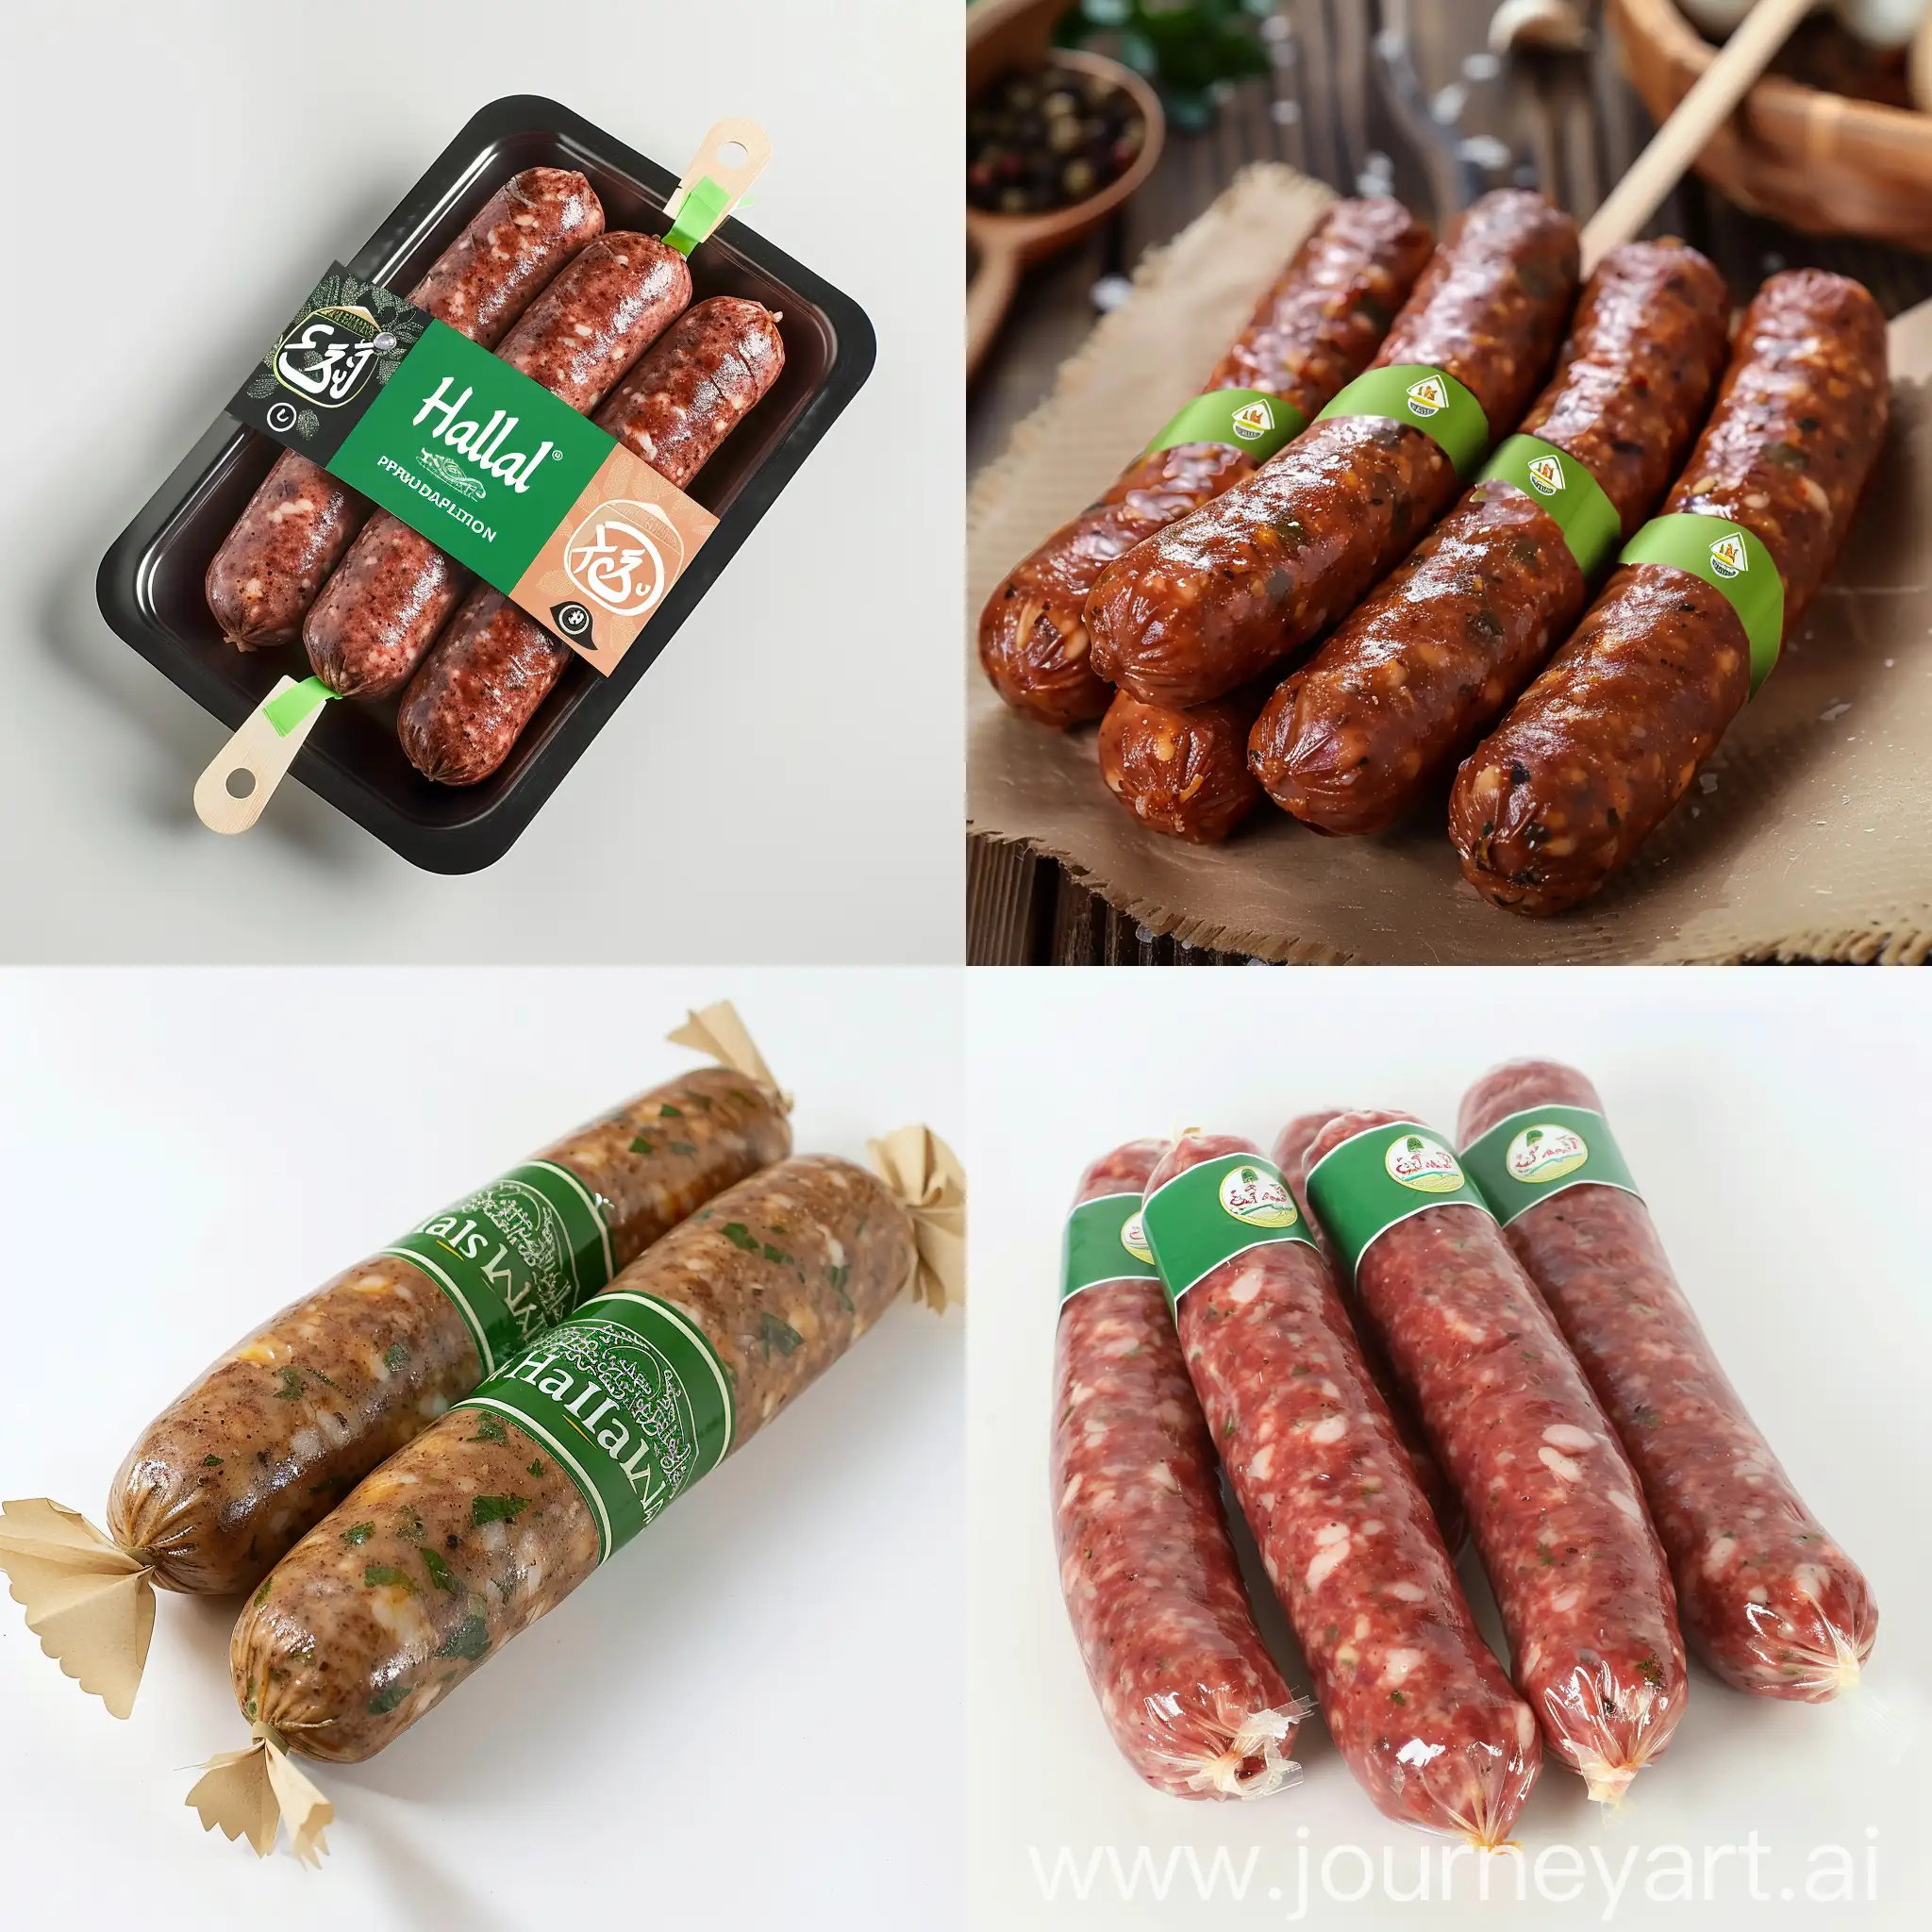 Premium-Halal-Sausage-Label-with-Green-Design